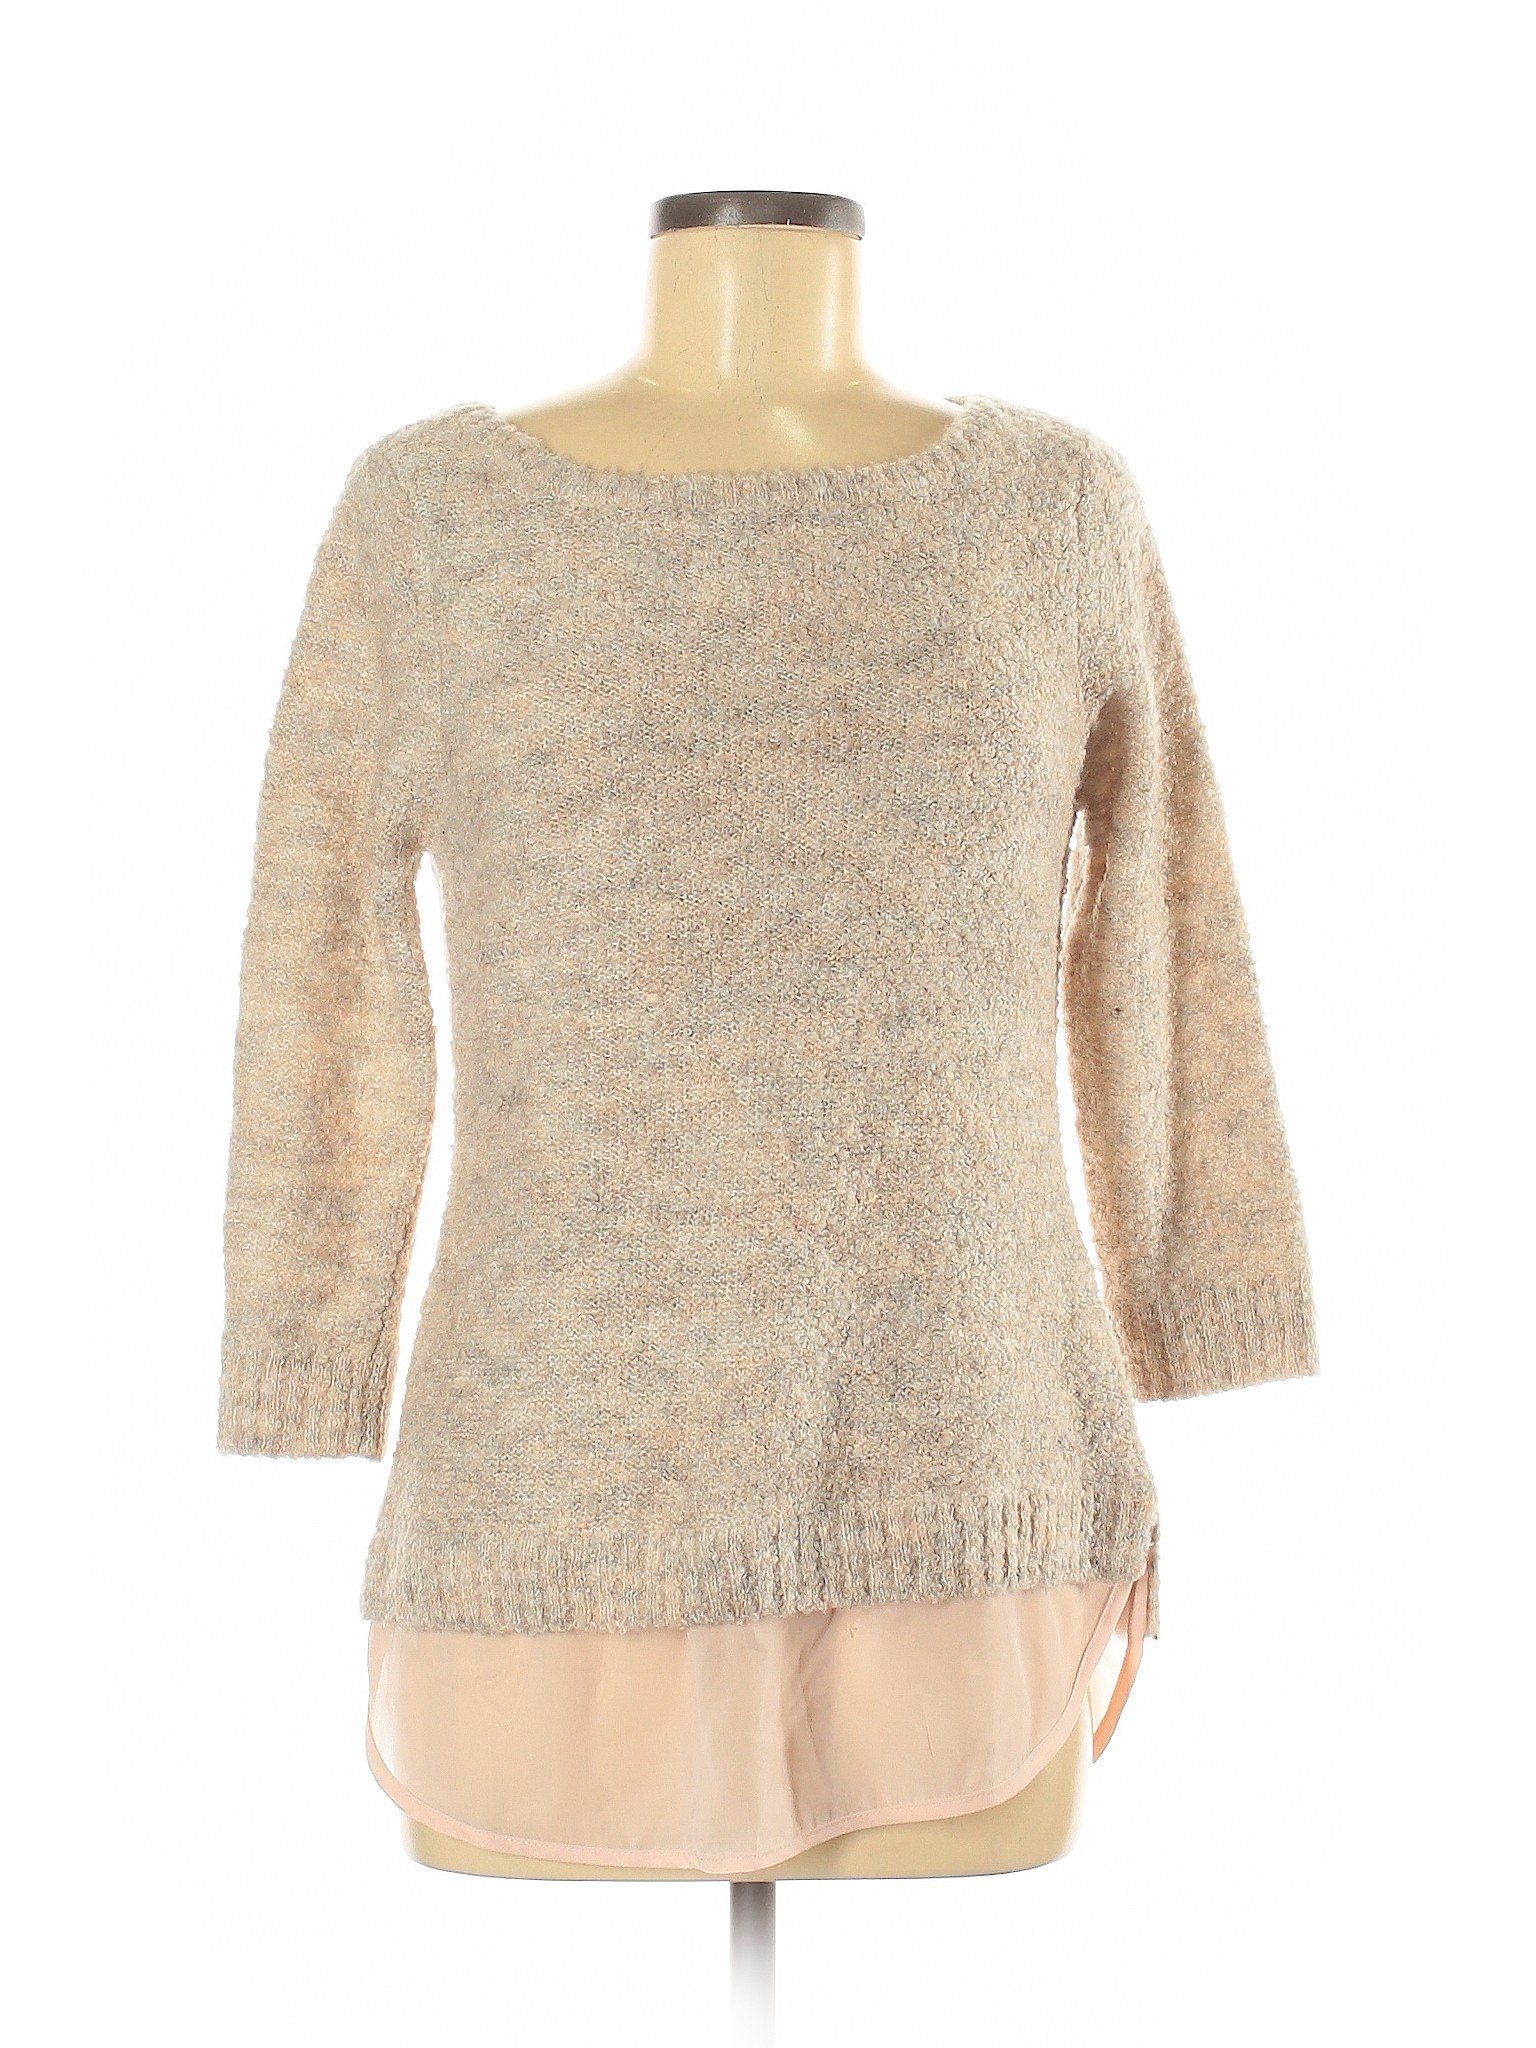 NWT Roz & Ali Women Brown Pullover Sweater M | eBay